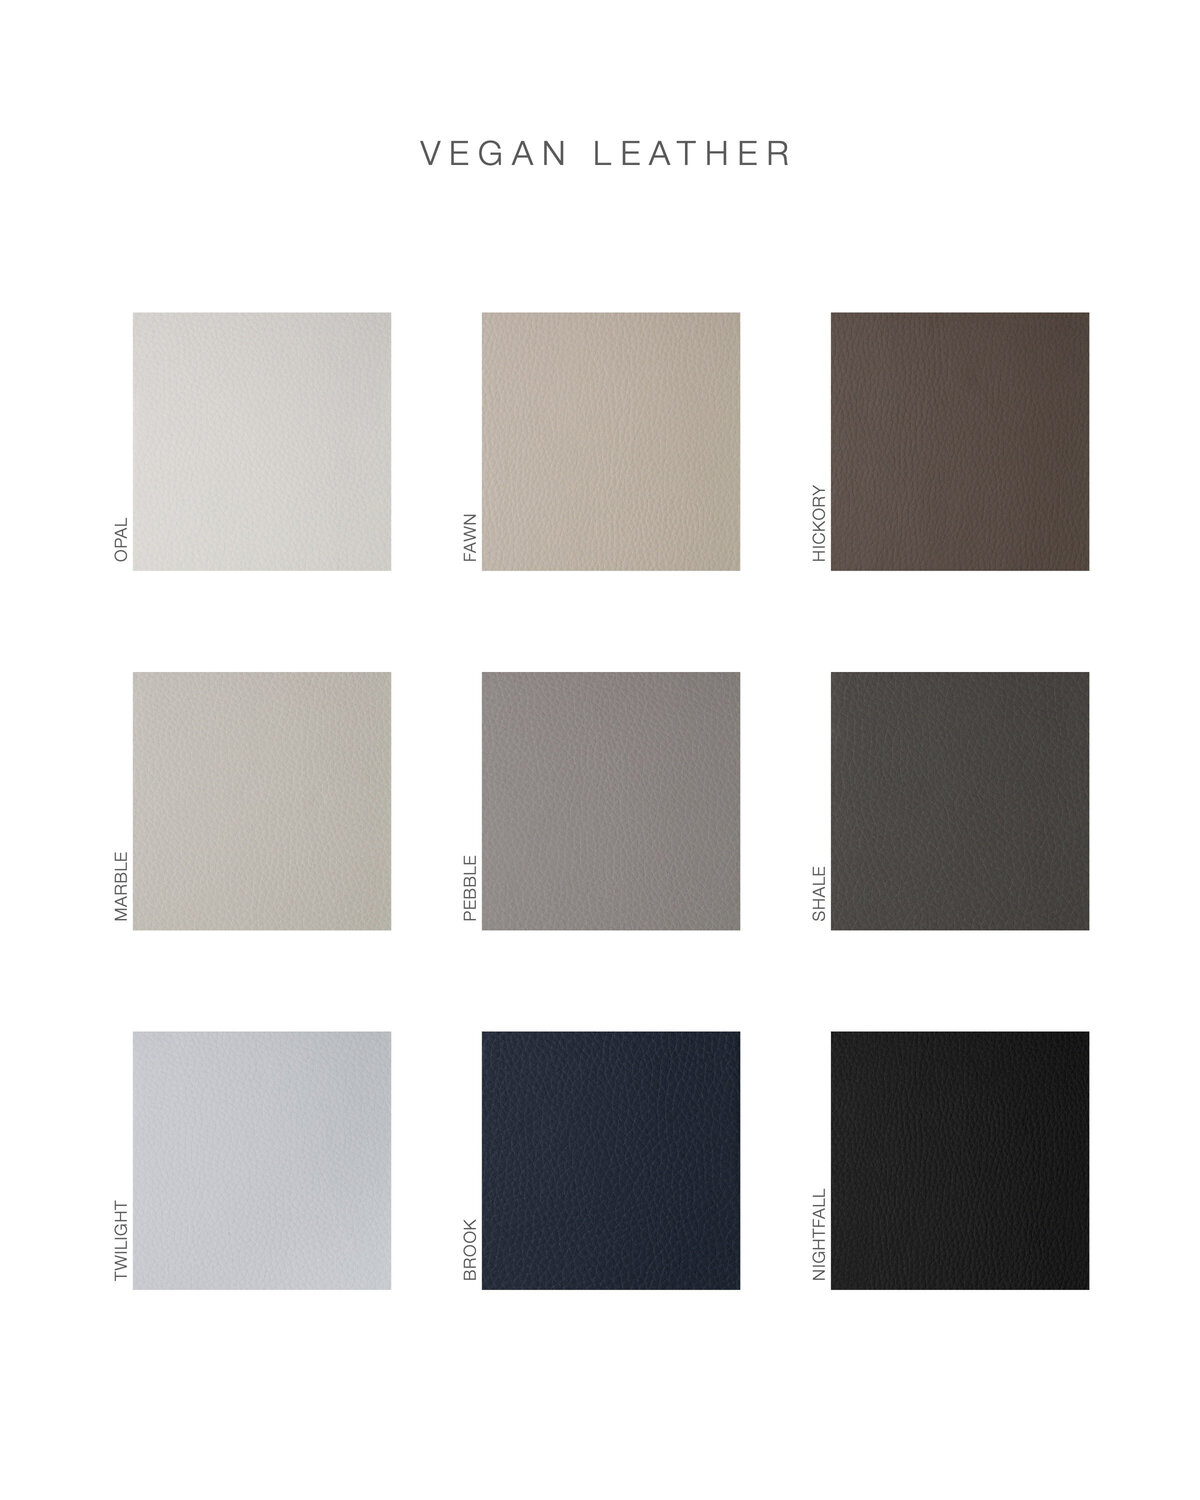 Vegan Leather